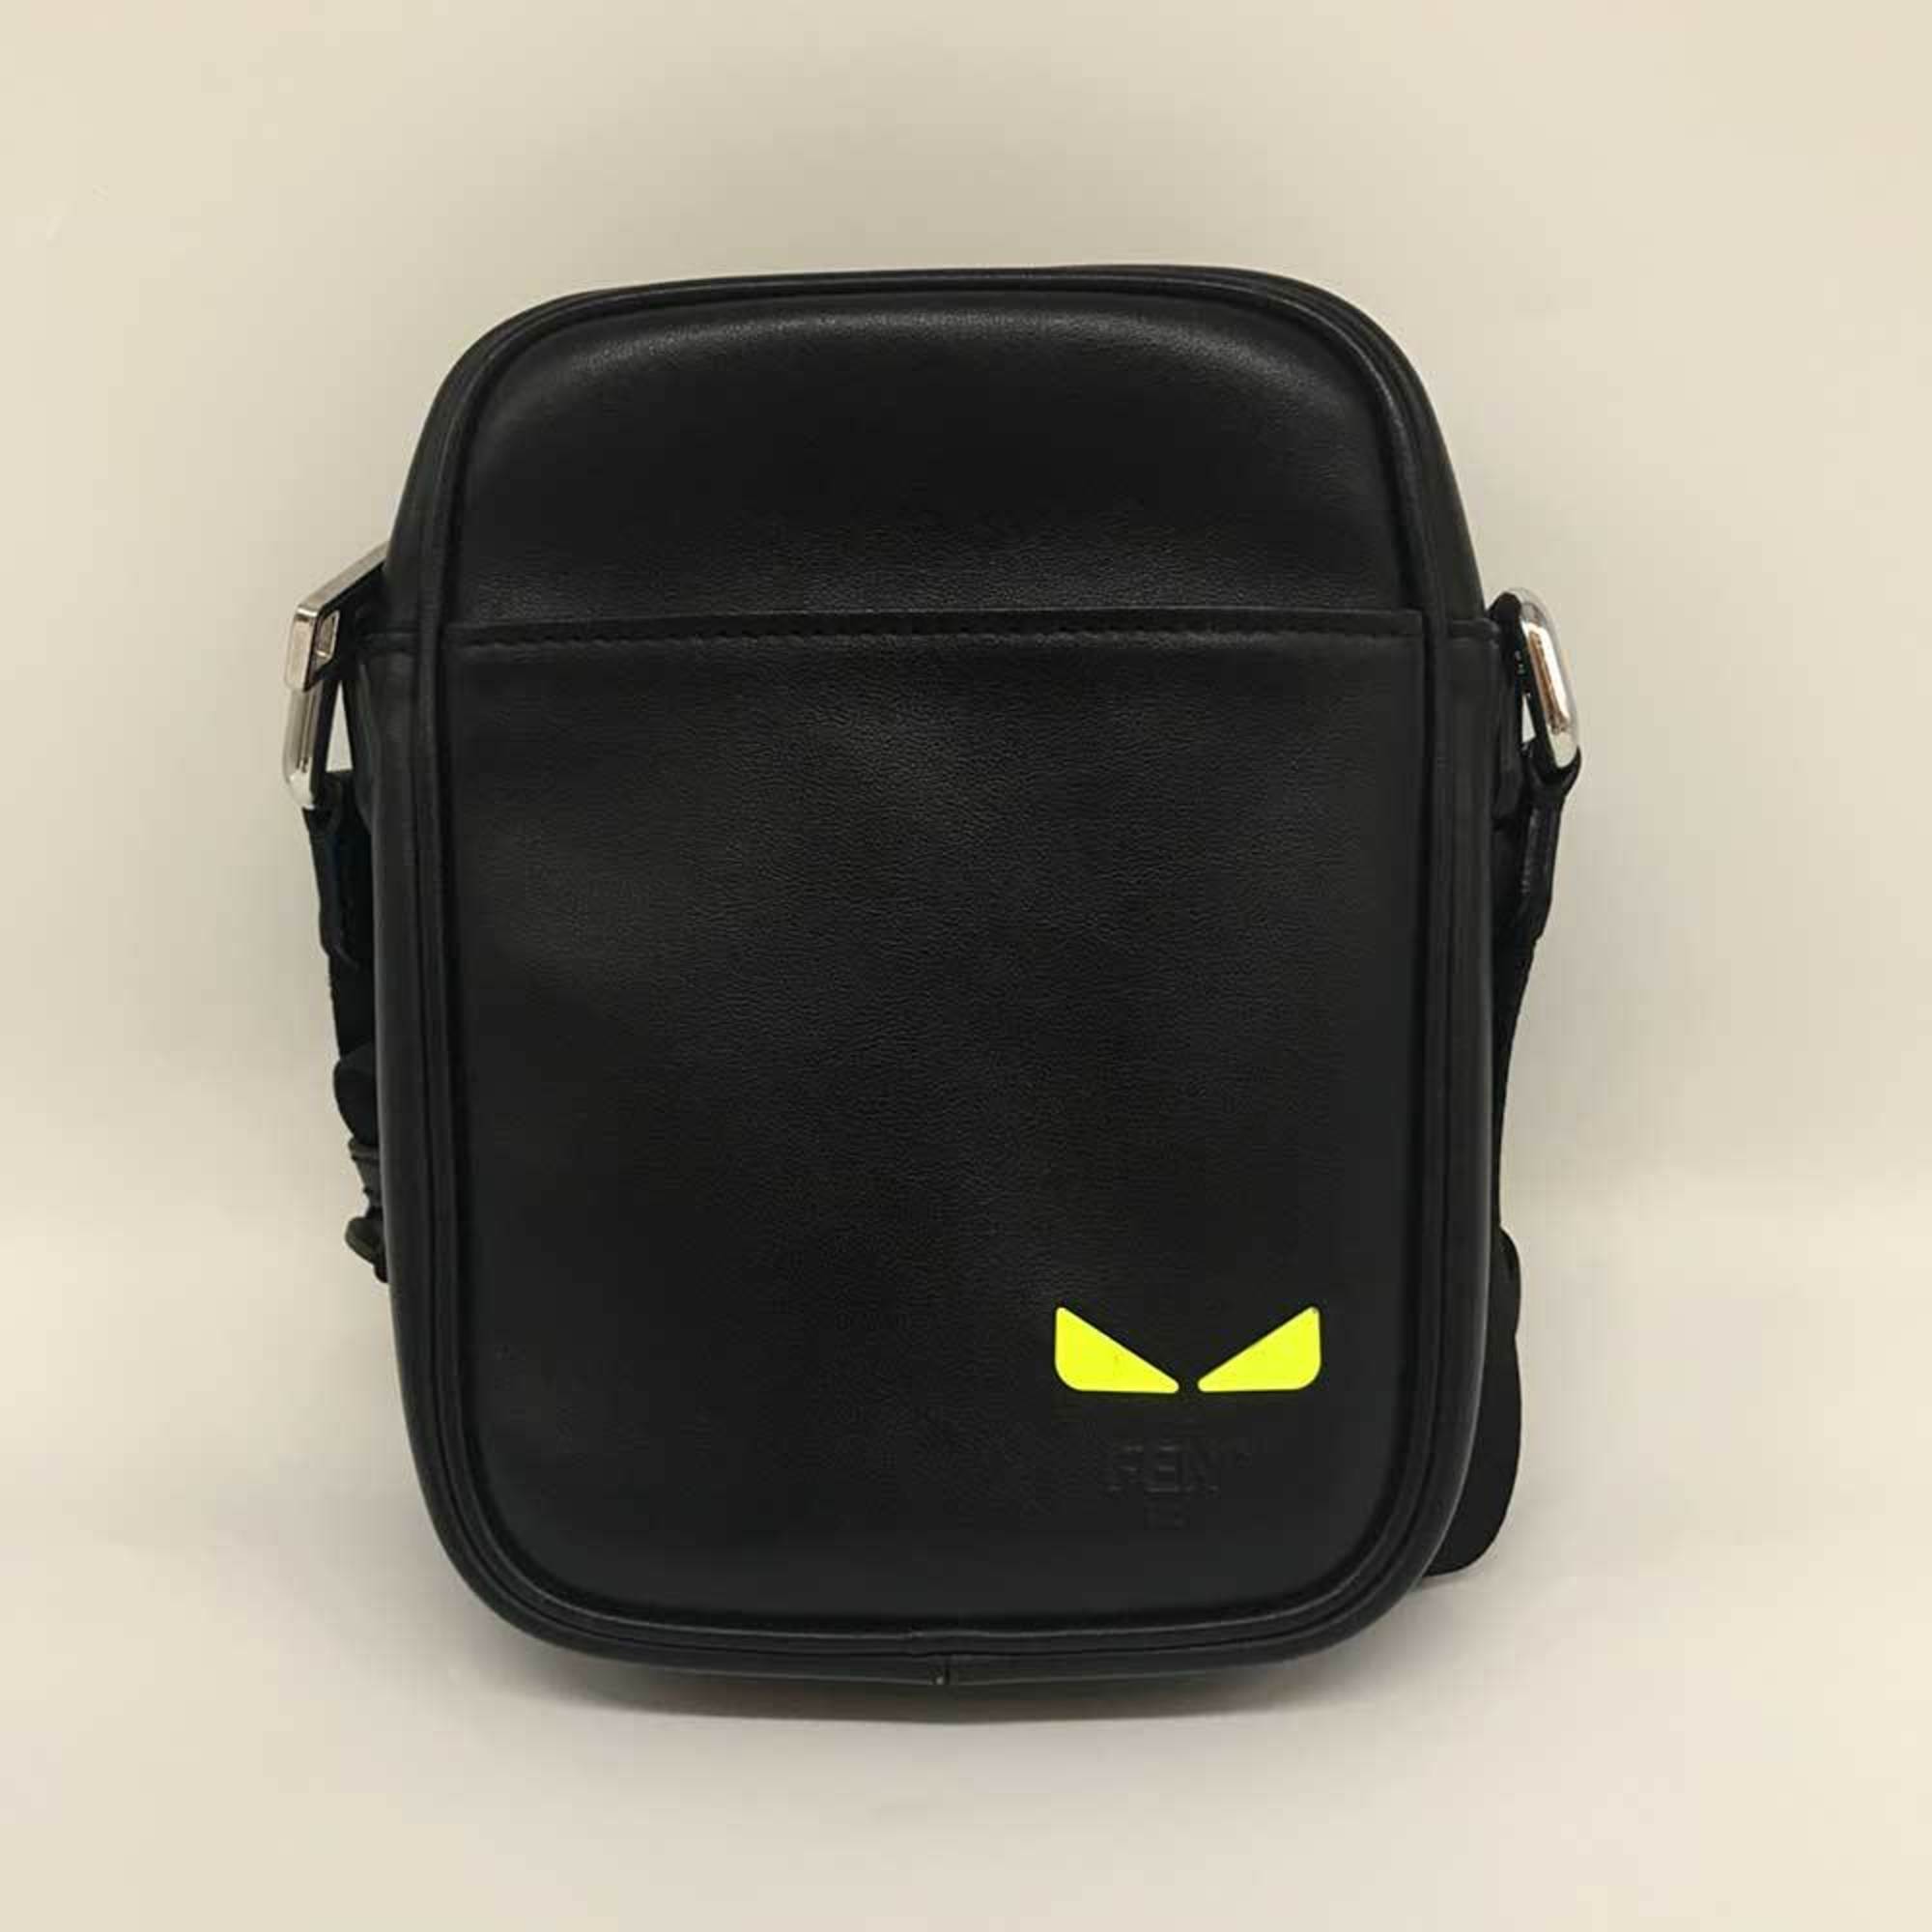 Fendi Shoulder Bag Isee 7V56 Black Neon Yellow Leather FENDI